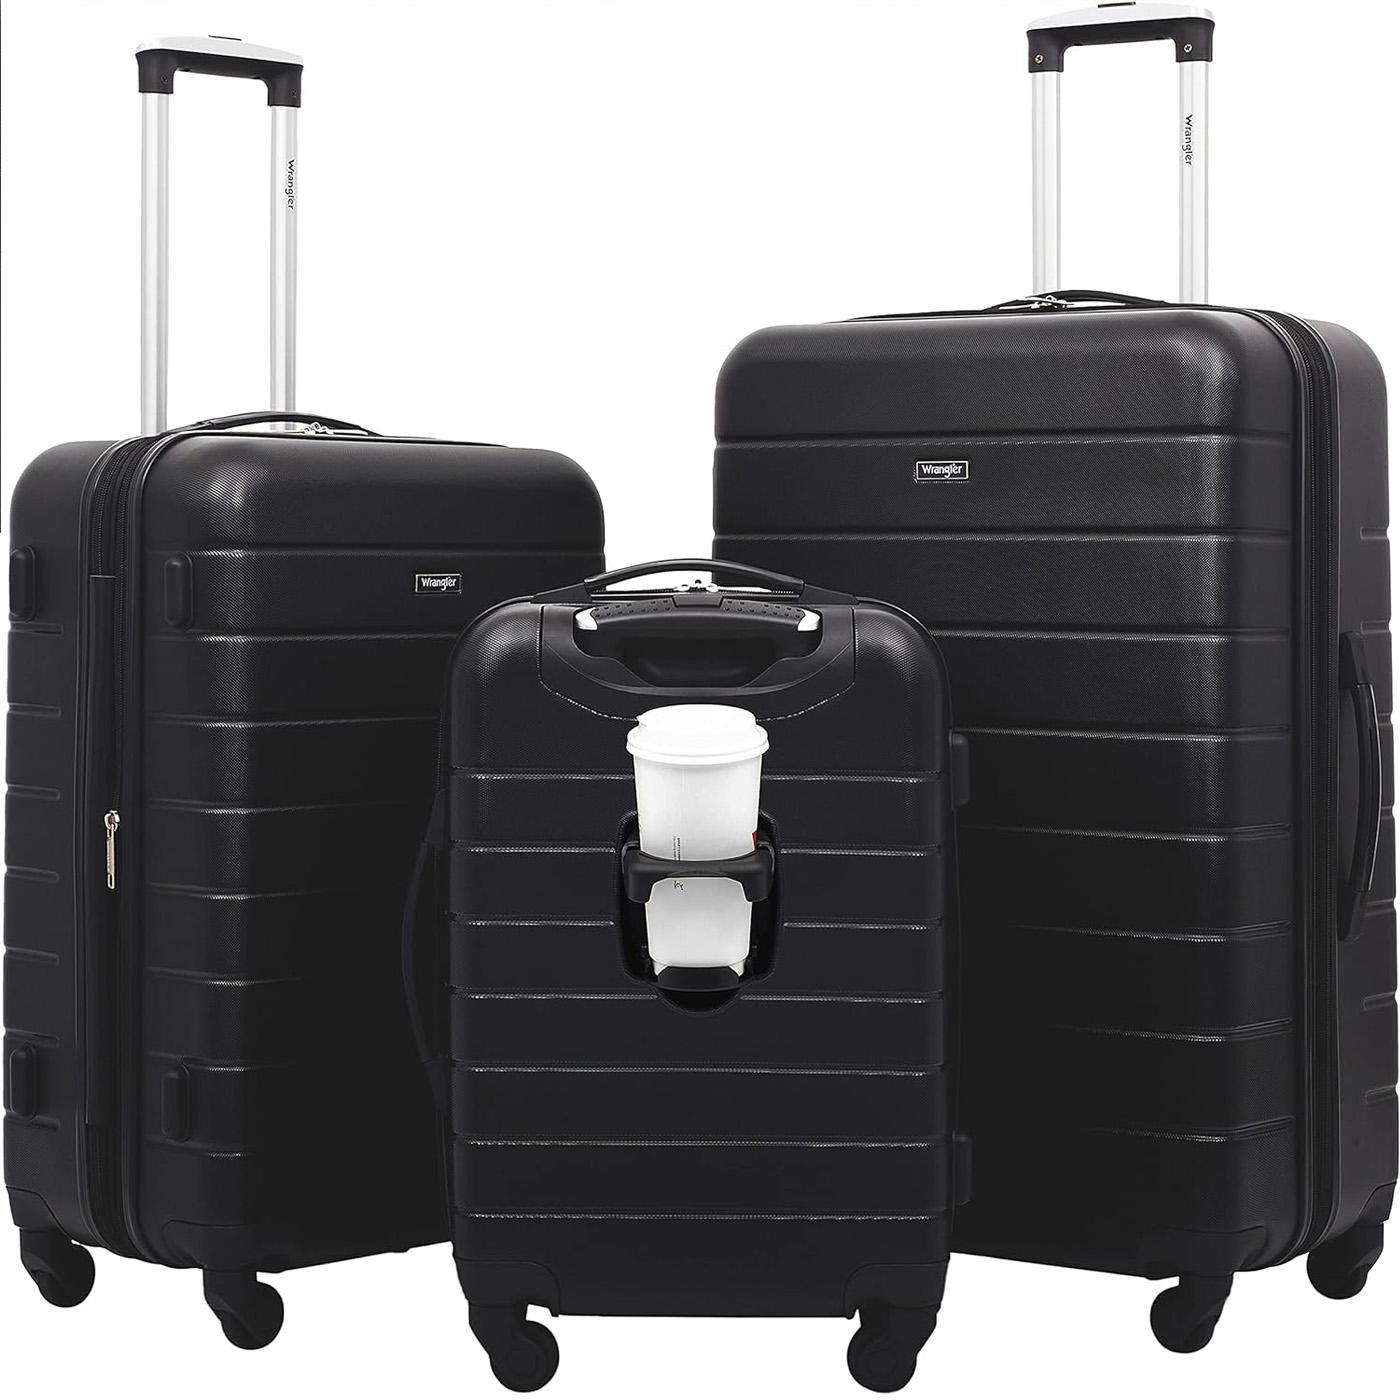 Wrangler 3 Piece Hardside Smart Luggage Set for $109 Shipped